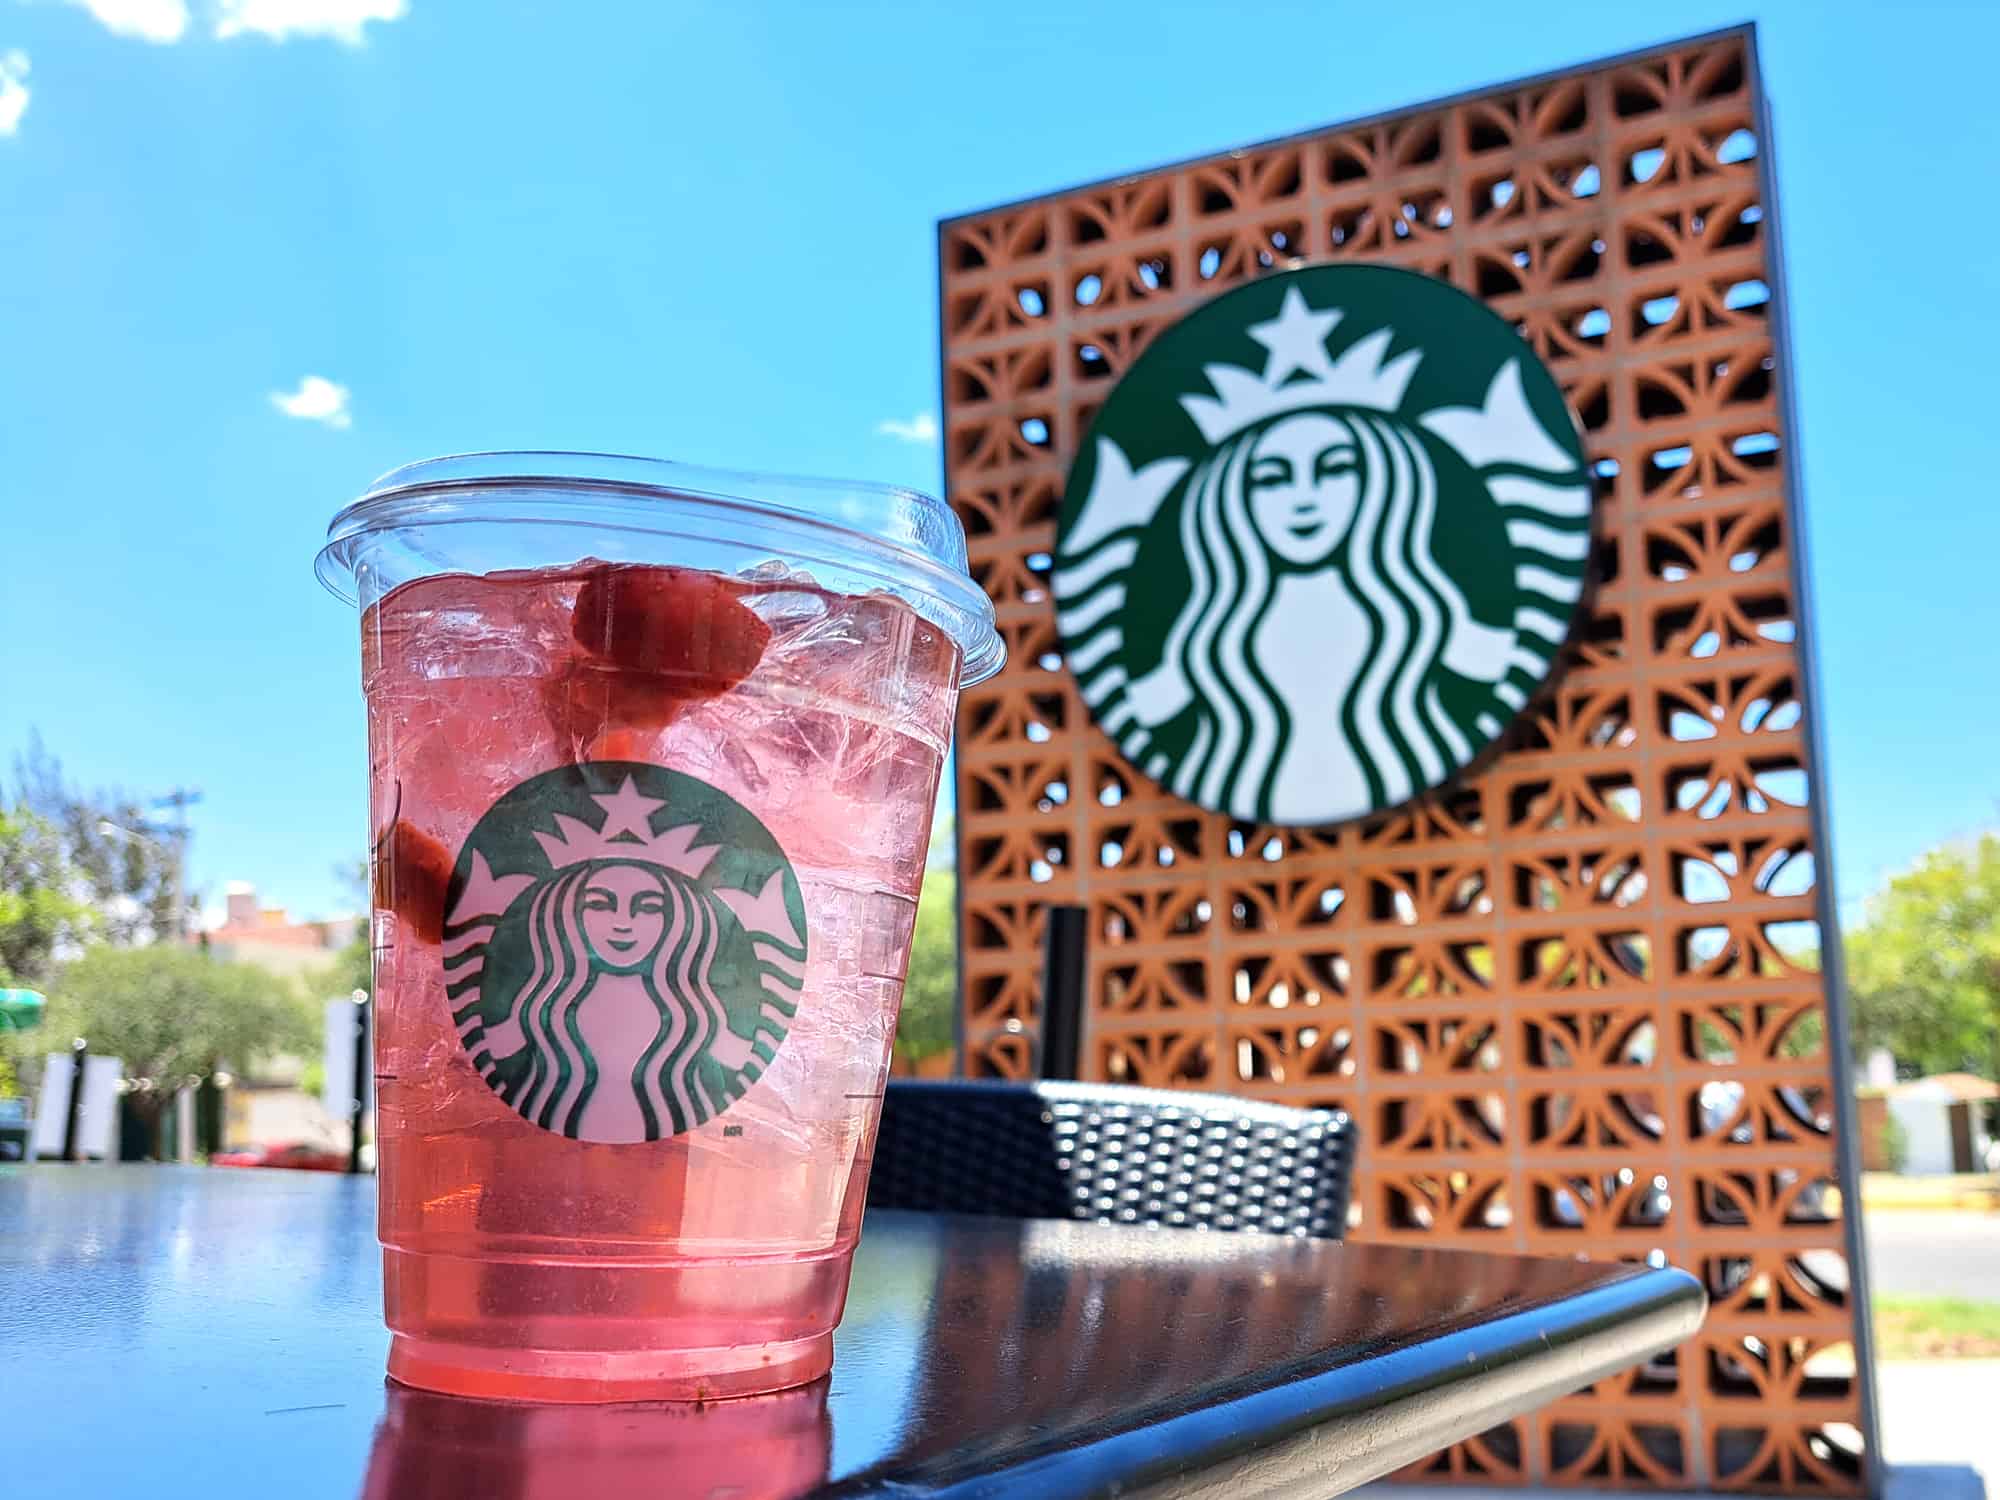 Starbucks Reusable Cup-tropical Starbucks Cup-hibiscus Starbucks